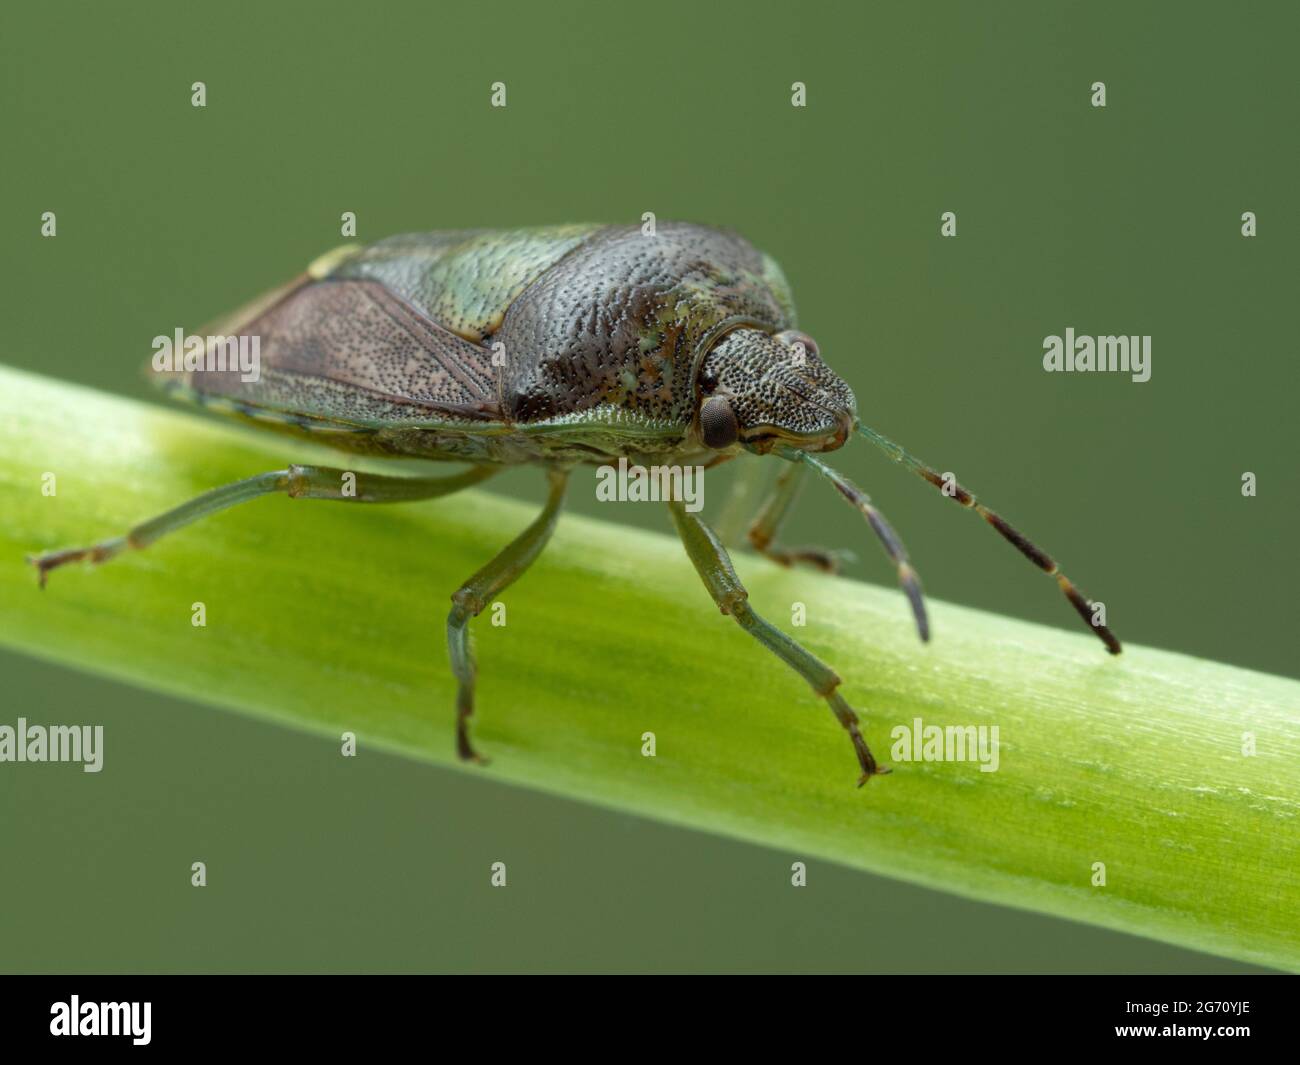 close-up of a green burgundy stink bug (Banasa dimidiata) walking on a plant stem Stock Photo